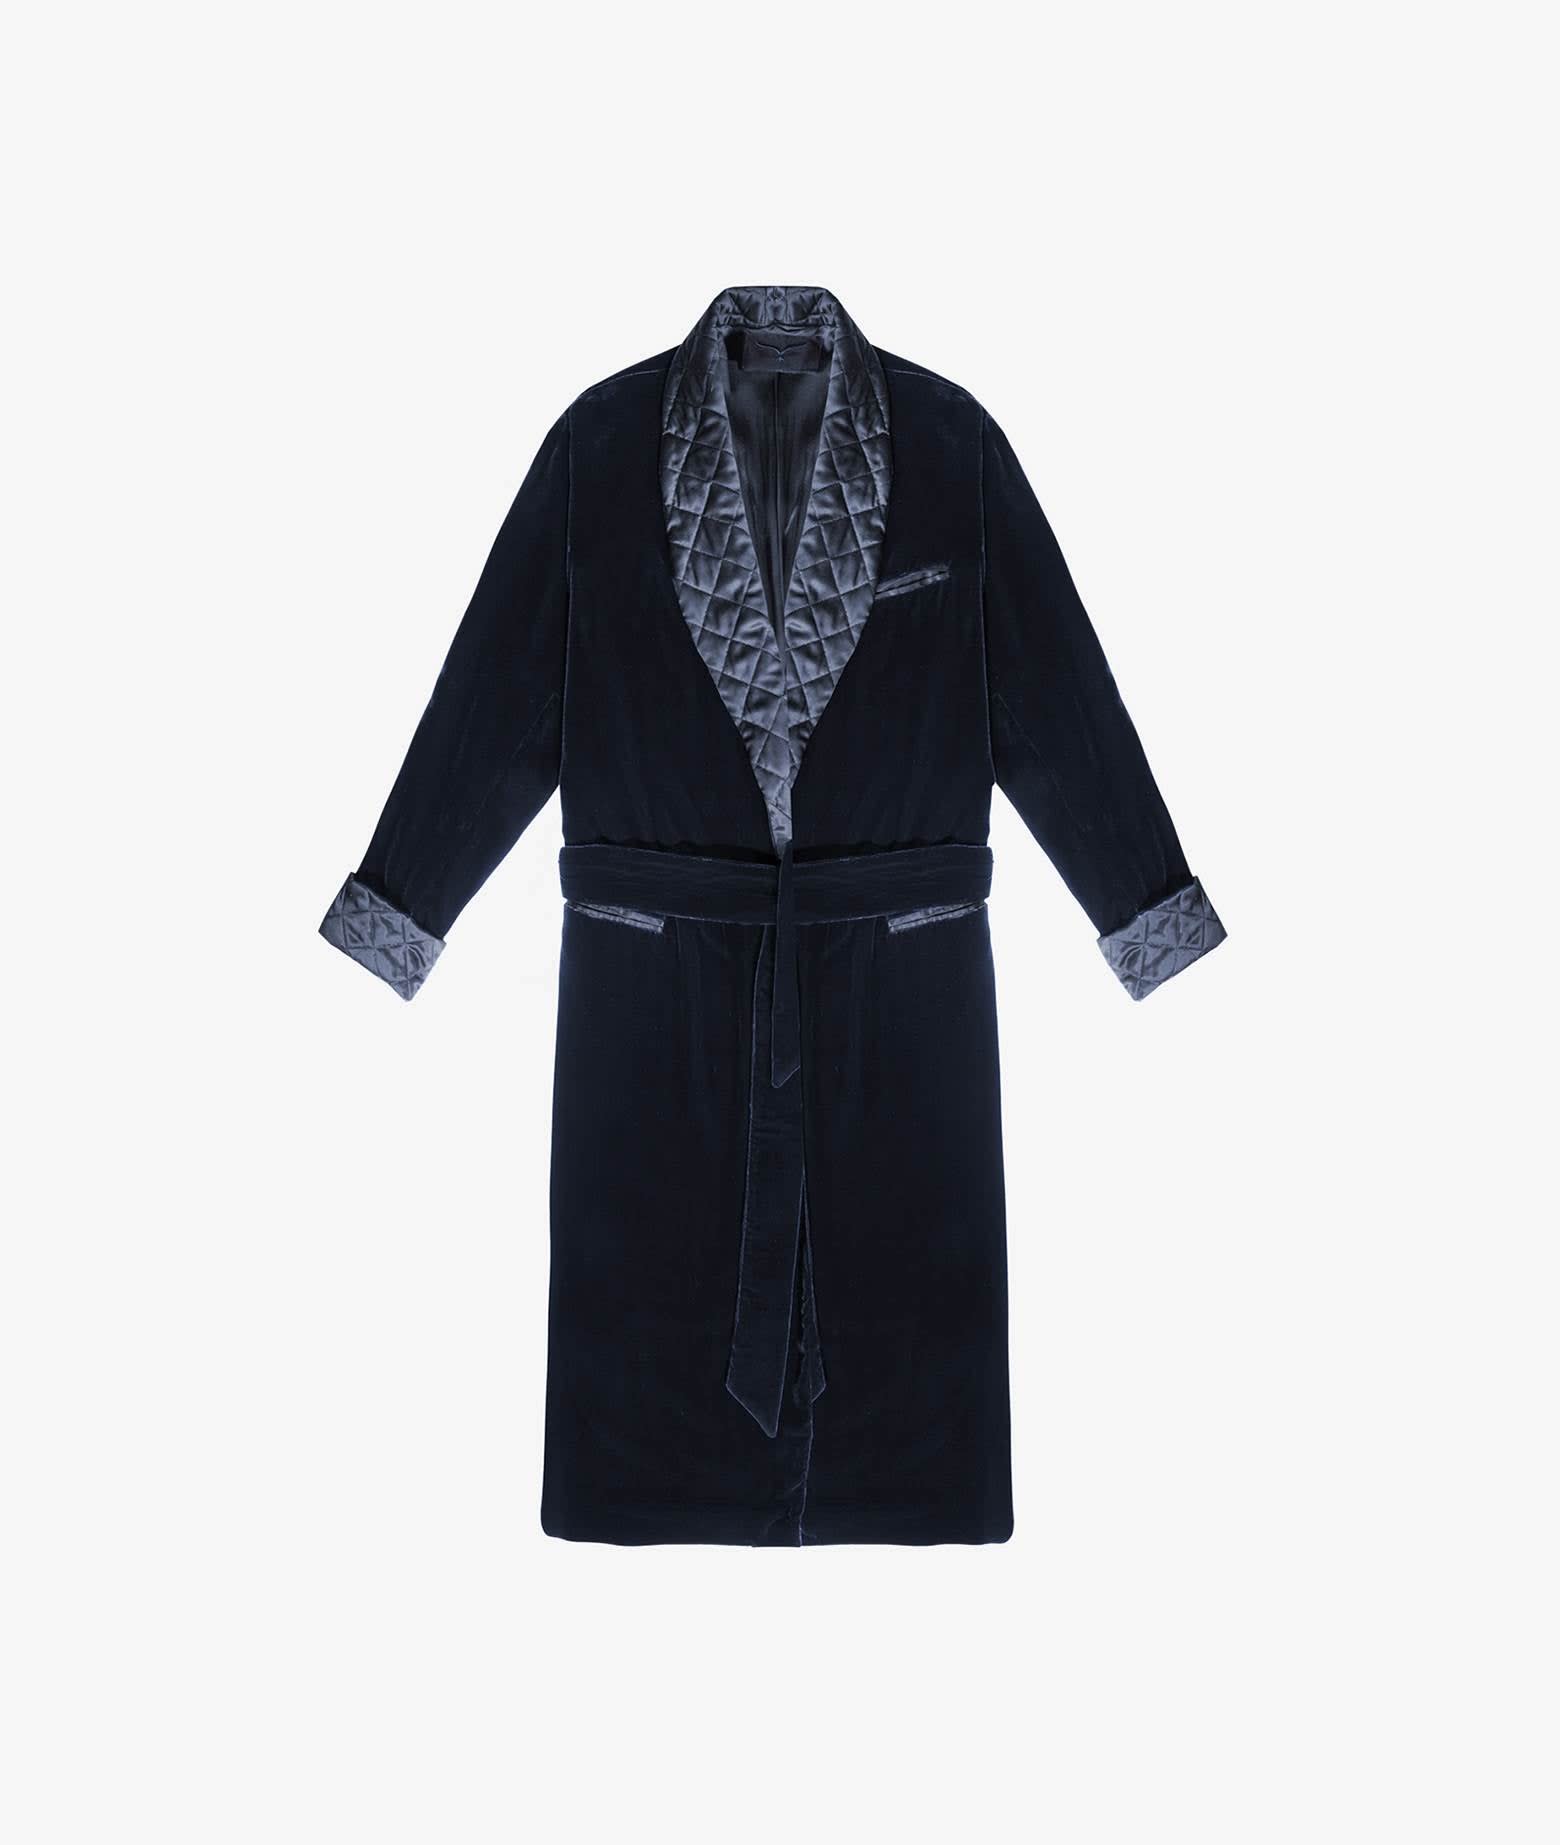 Larusmiani Dressing Gown Clark Gable Dressing Gown In Black